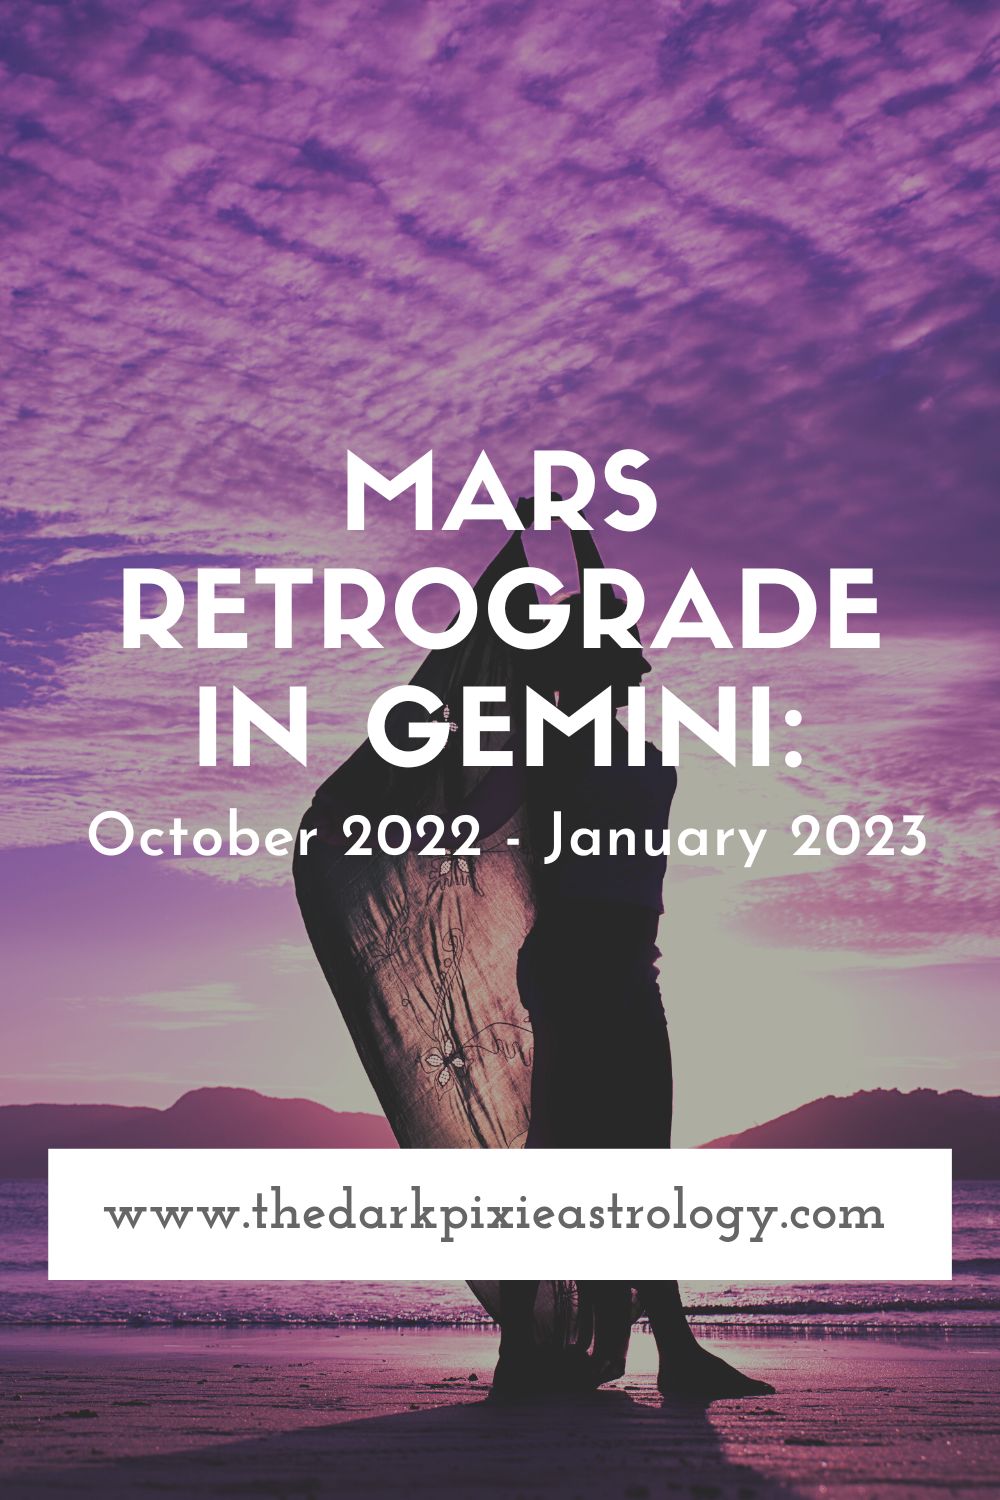 Mars Retrograde in Gemini: October 2022 - January 2023 - The Dark Pixie Astrology